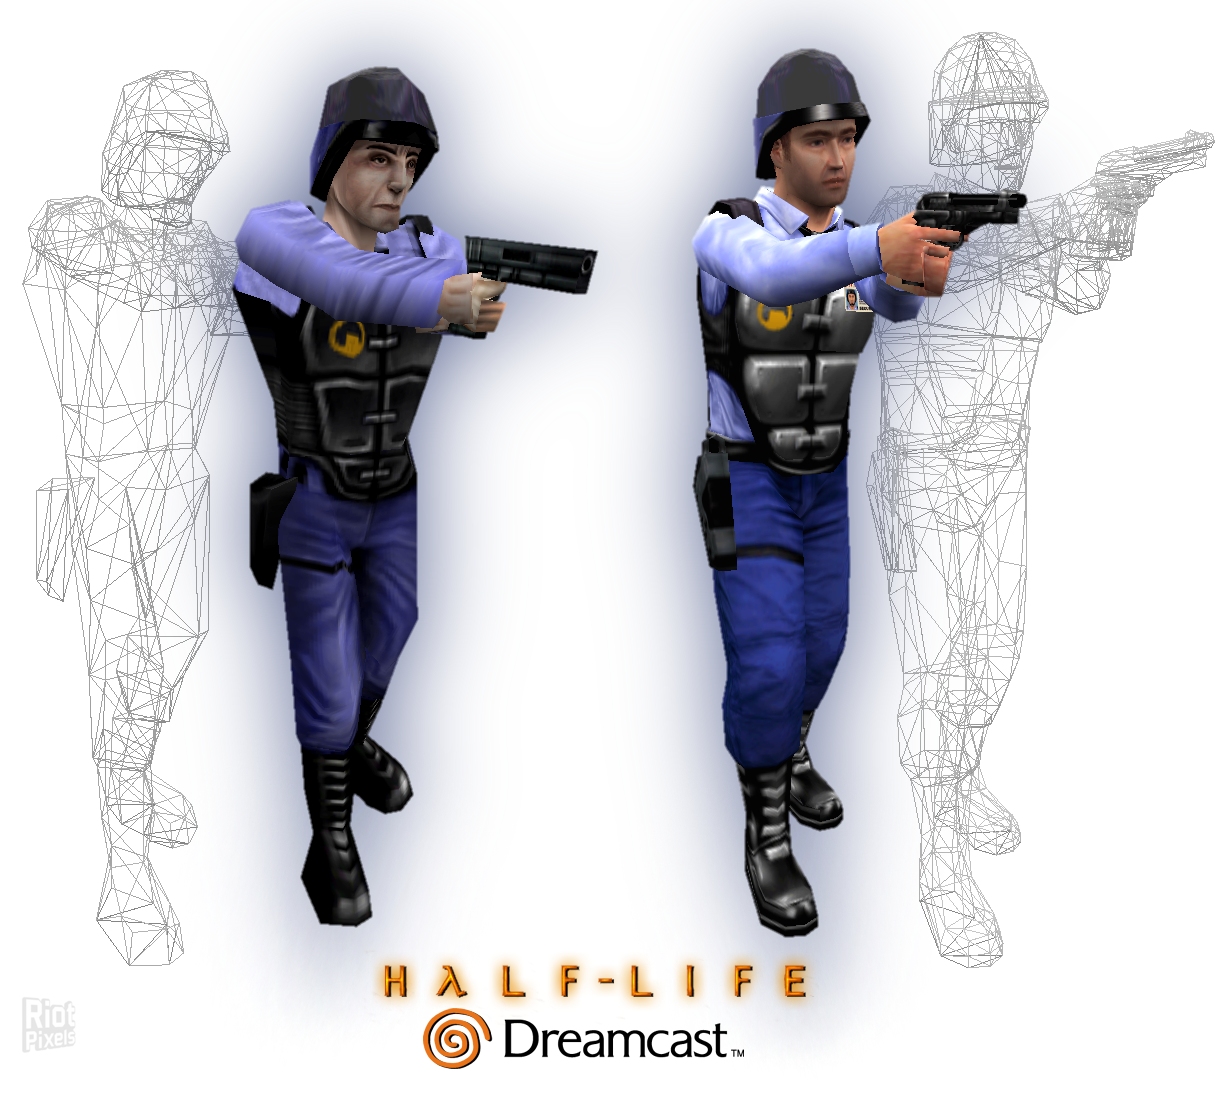 Half Life Dreamcast